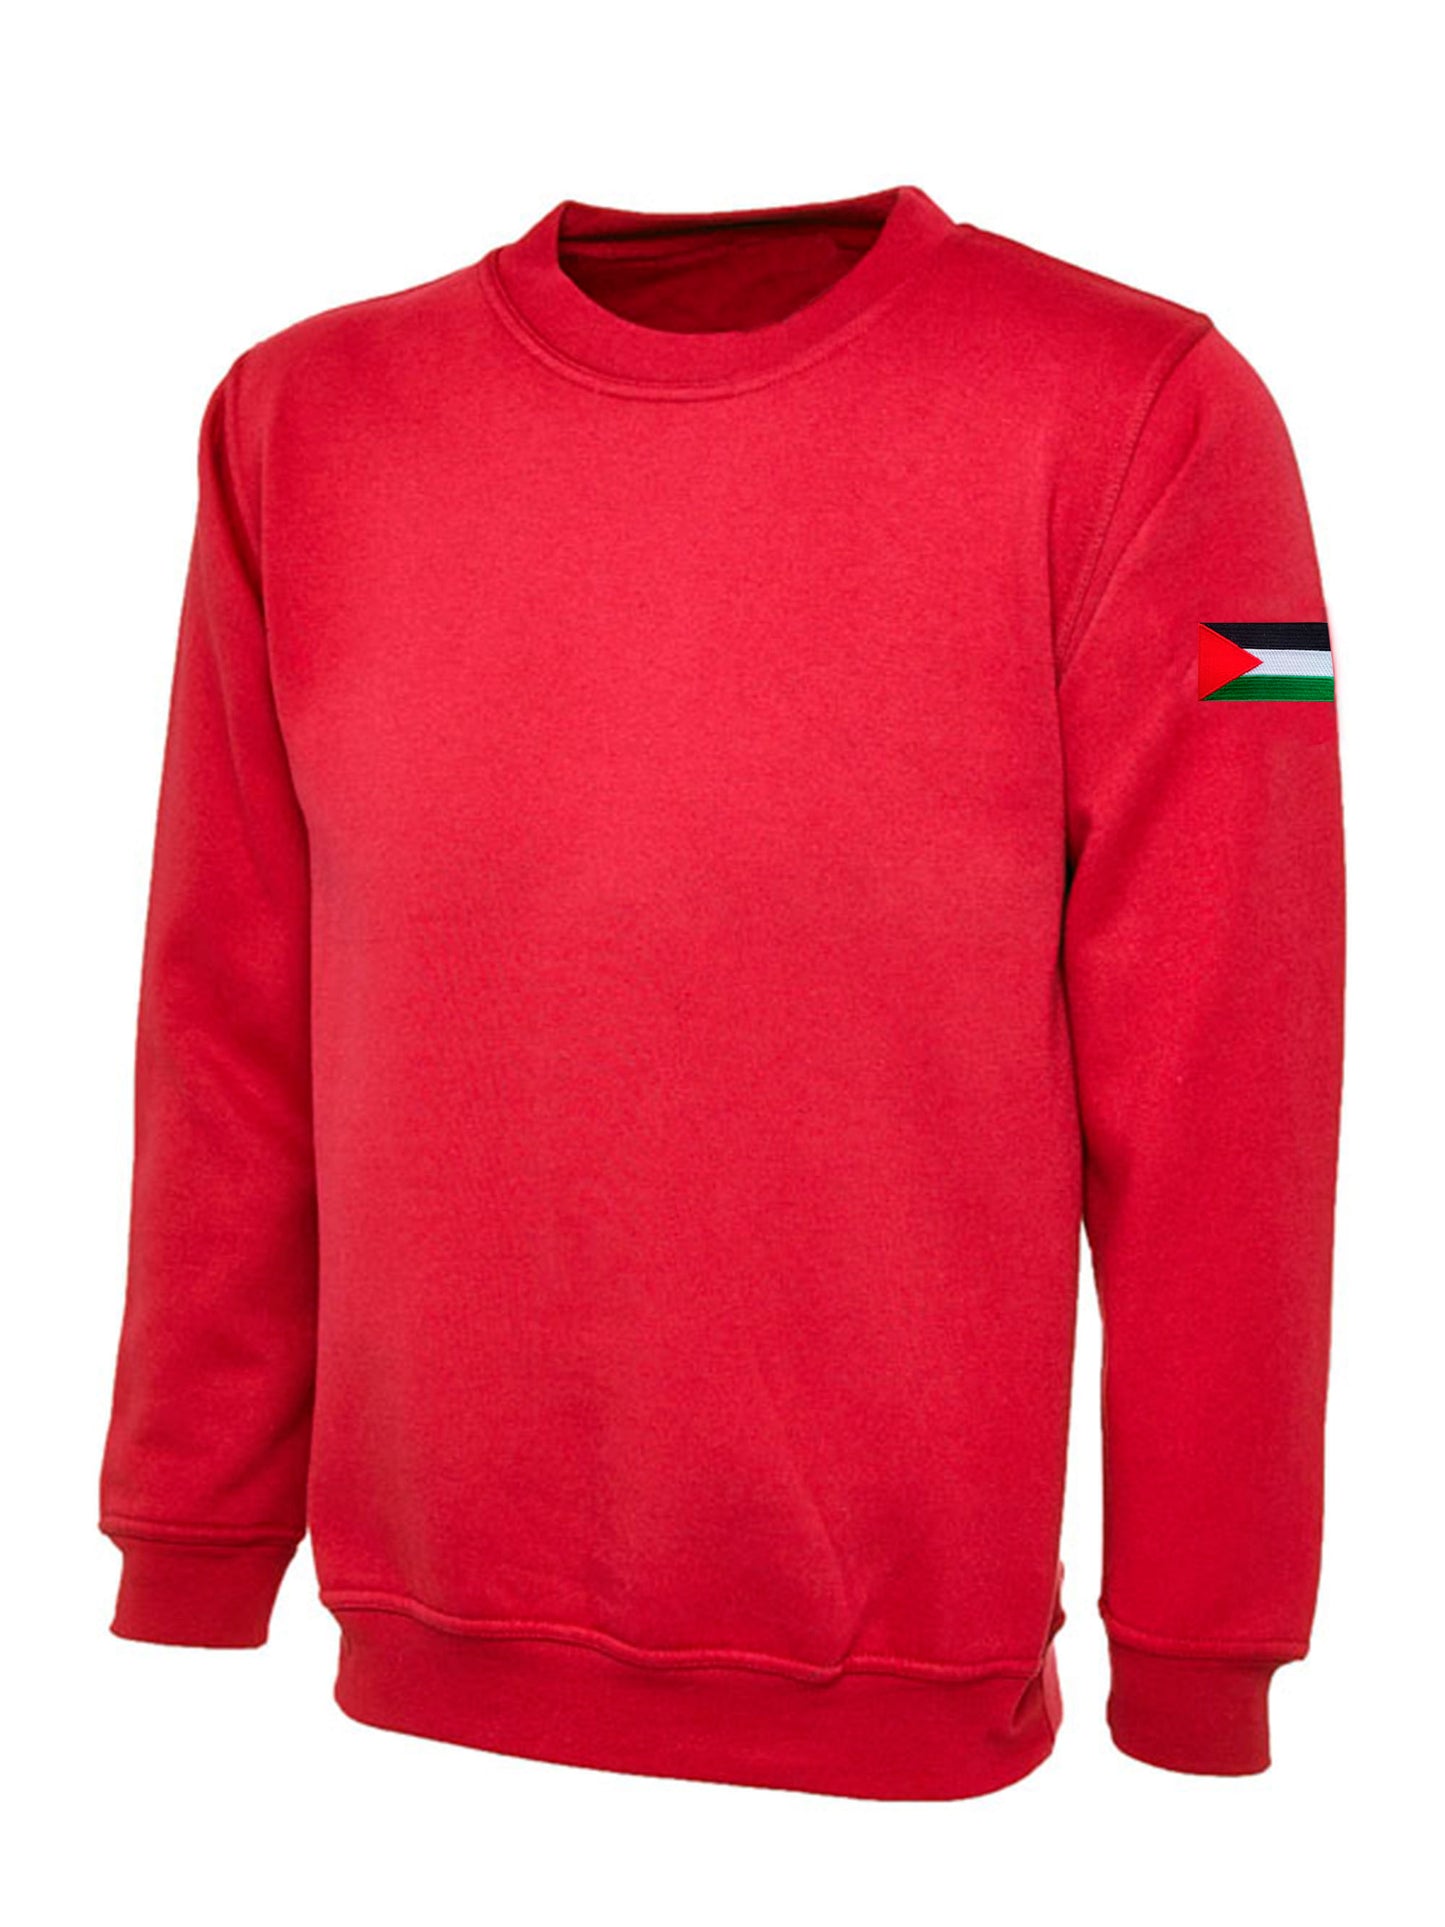 Palestine Sweatshirt Embroidered Flag Patch